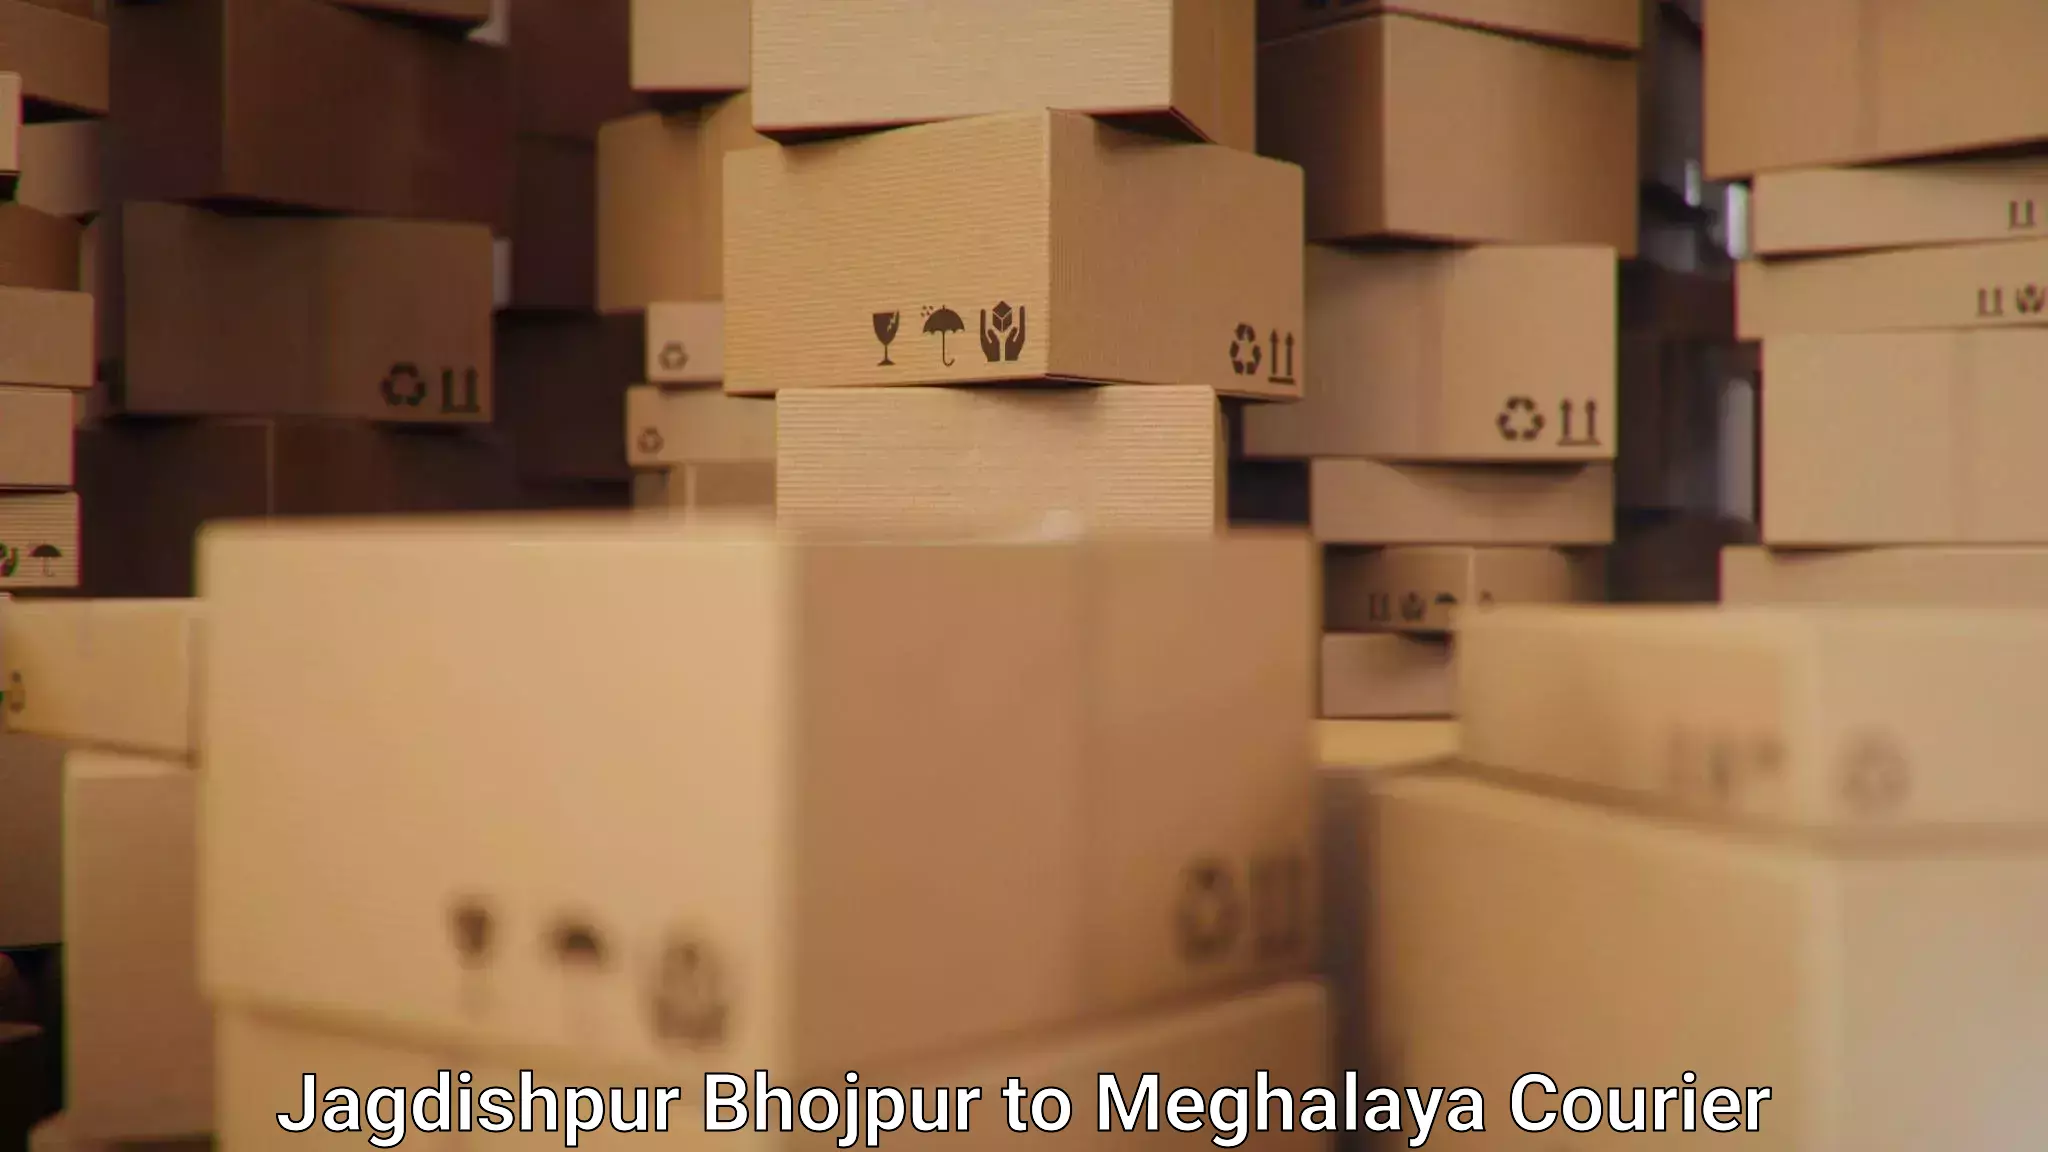 Specialized shipment handling Jagdishpur Bhojpur to Jaintia Hills